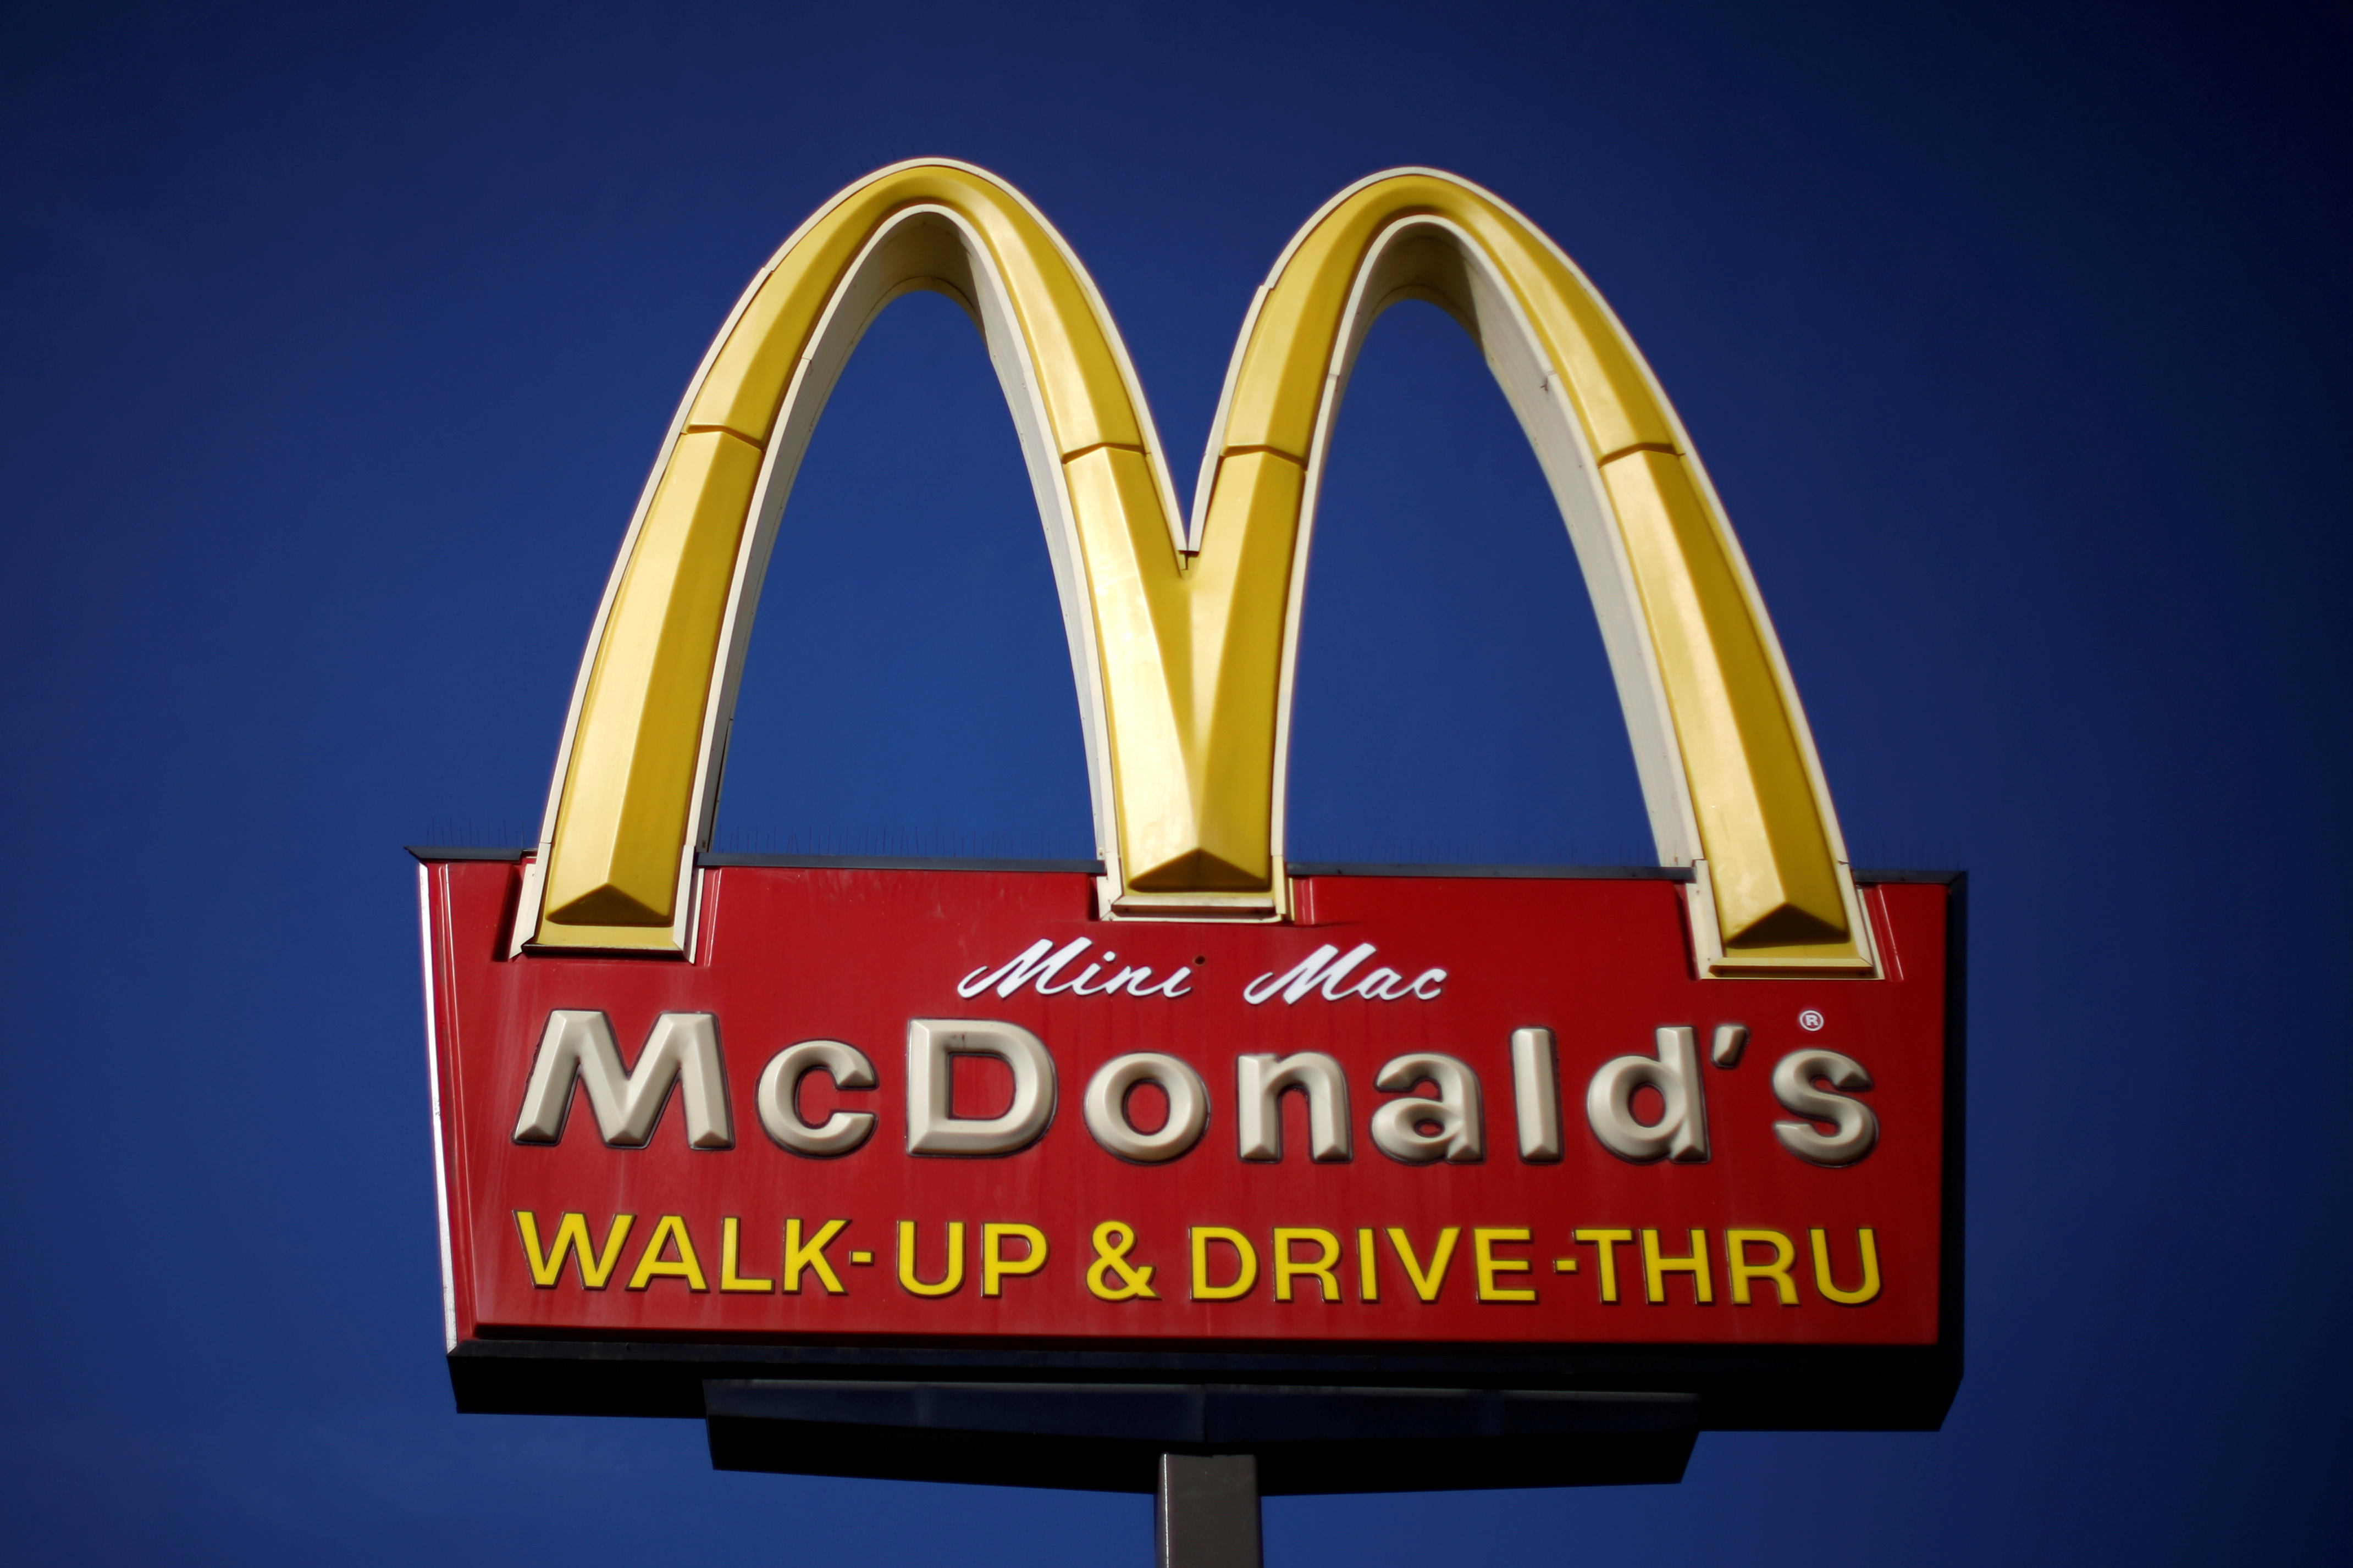 The logo of McDonald's. Photo via CBS News.